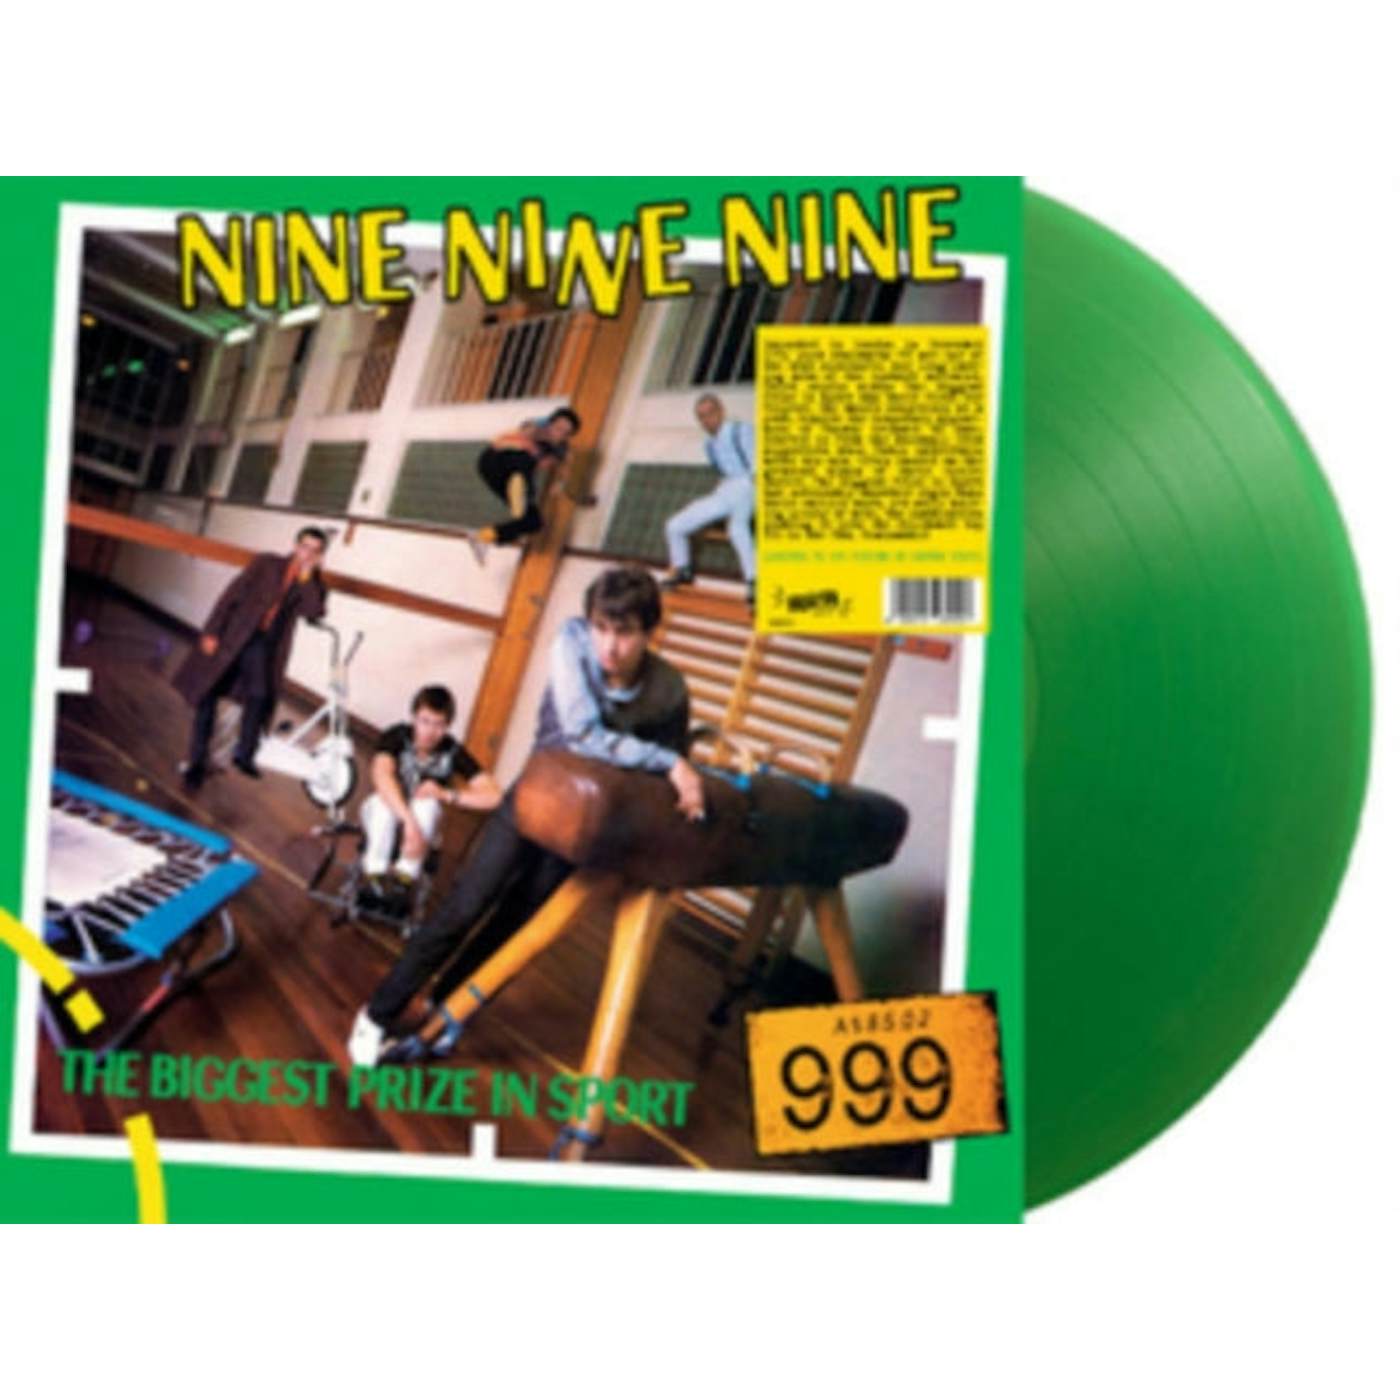 999 LP - The Biggest Prize In Sport (Green Vinyl)